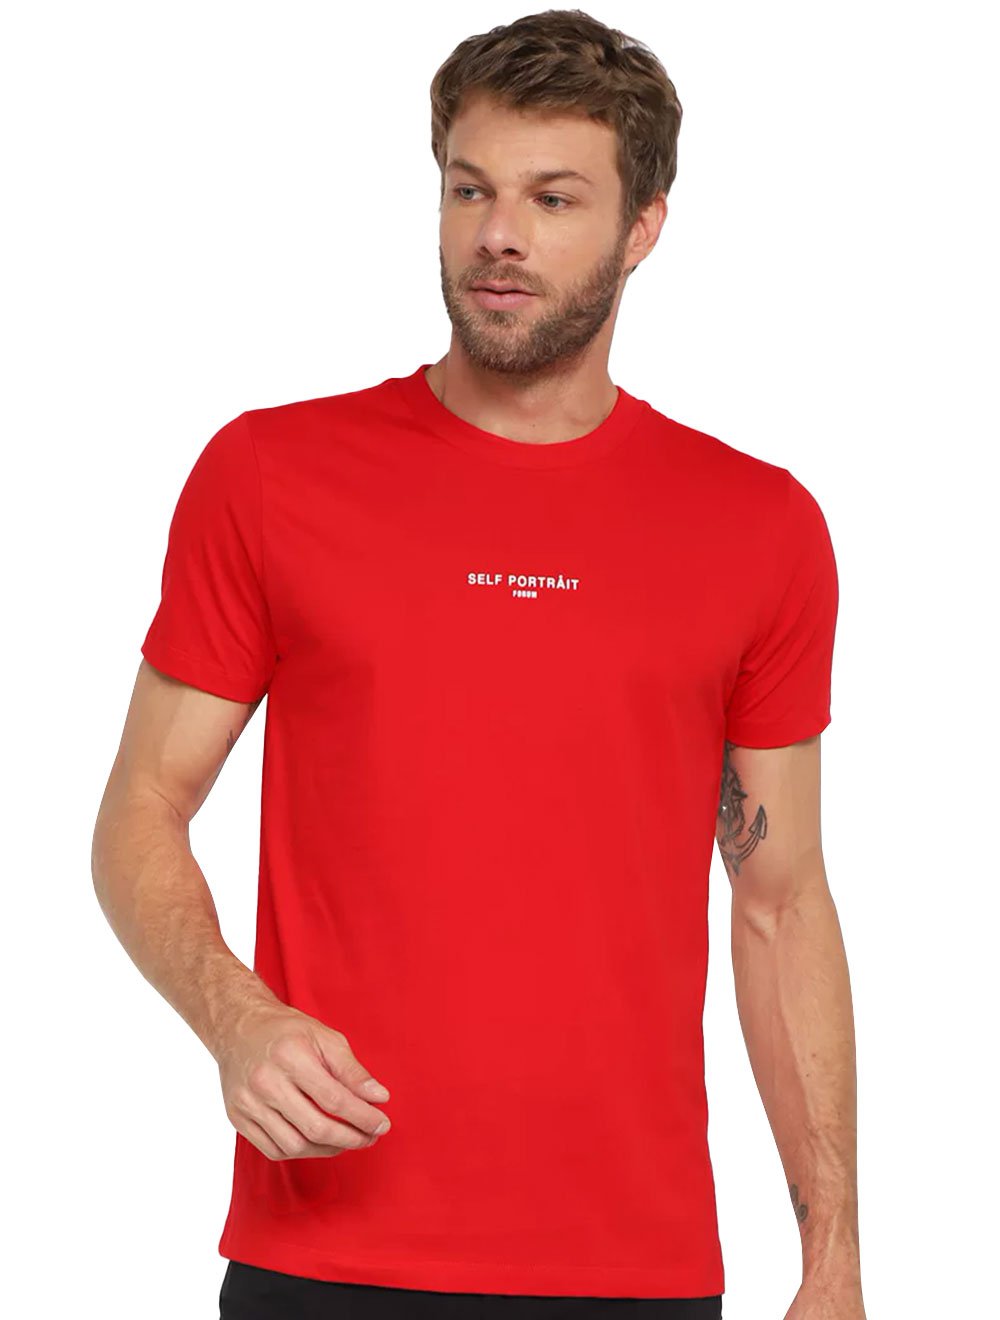 Camiseta Forum Masculina Slim Self Portrait Vermelha